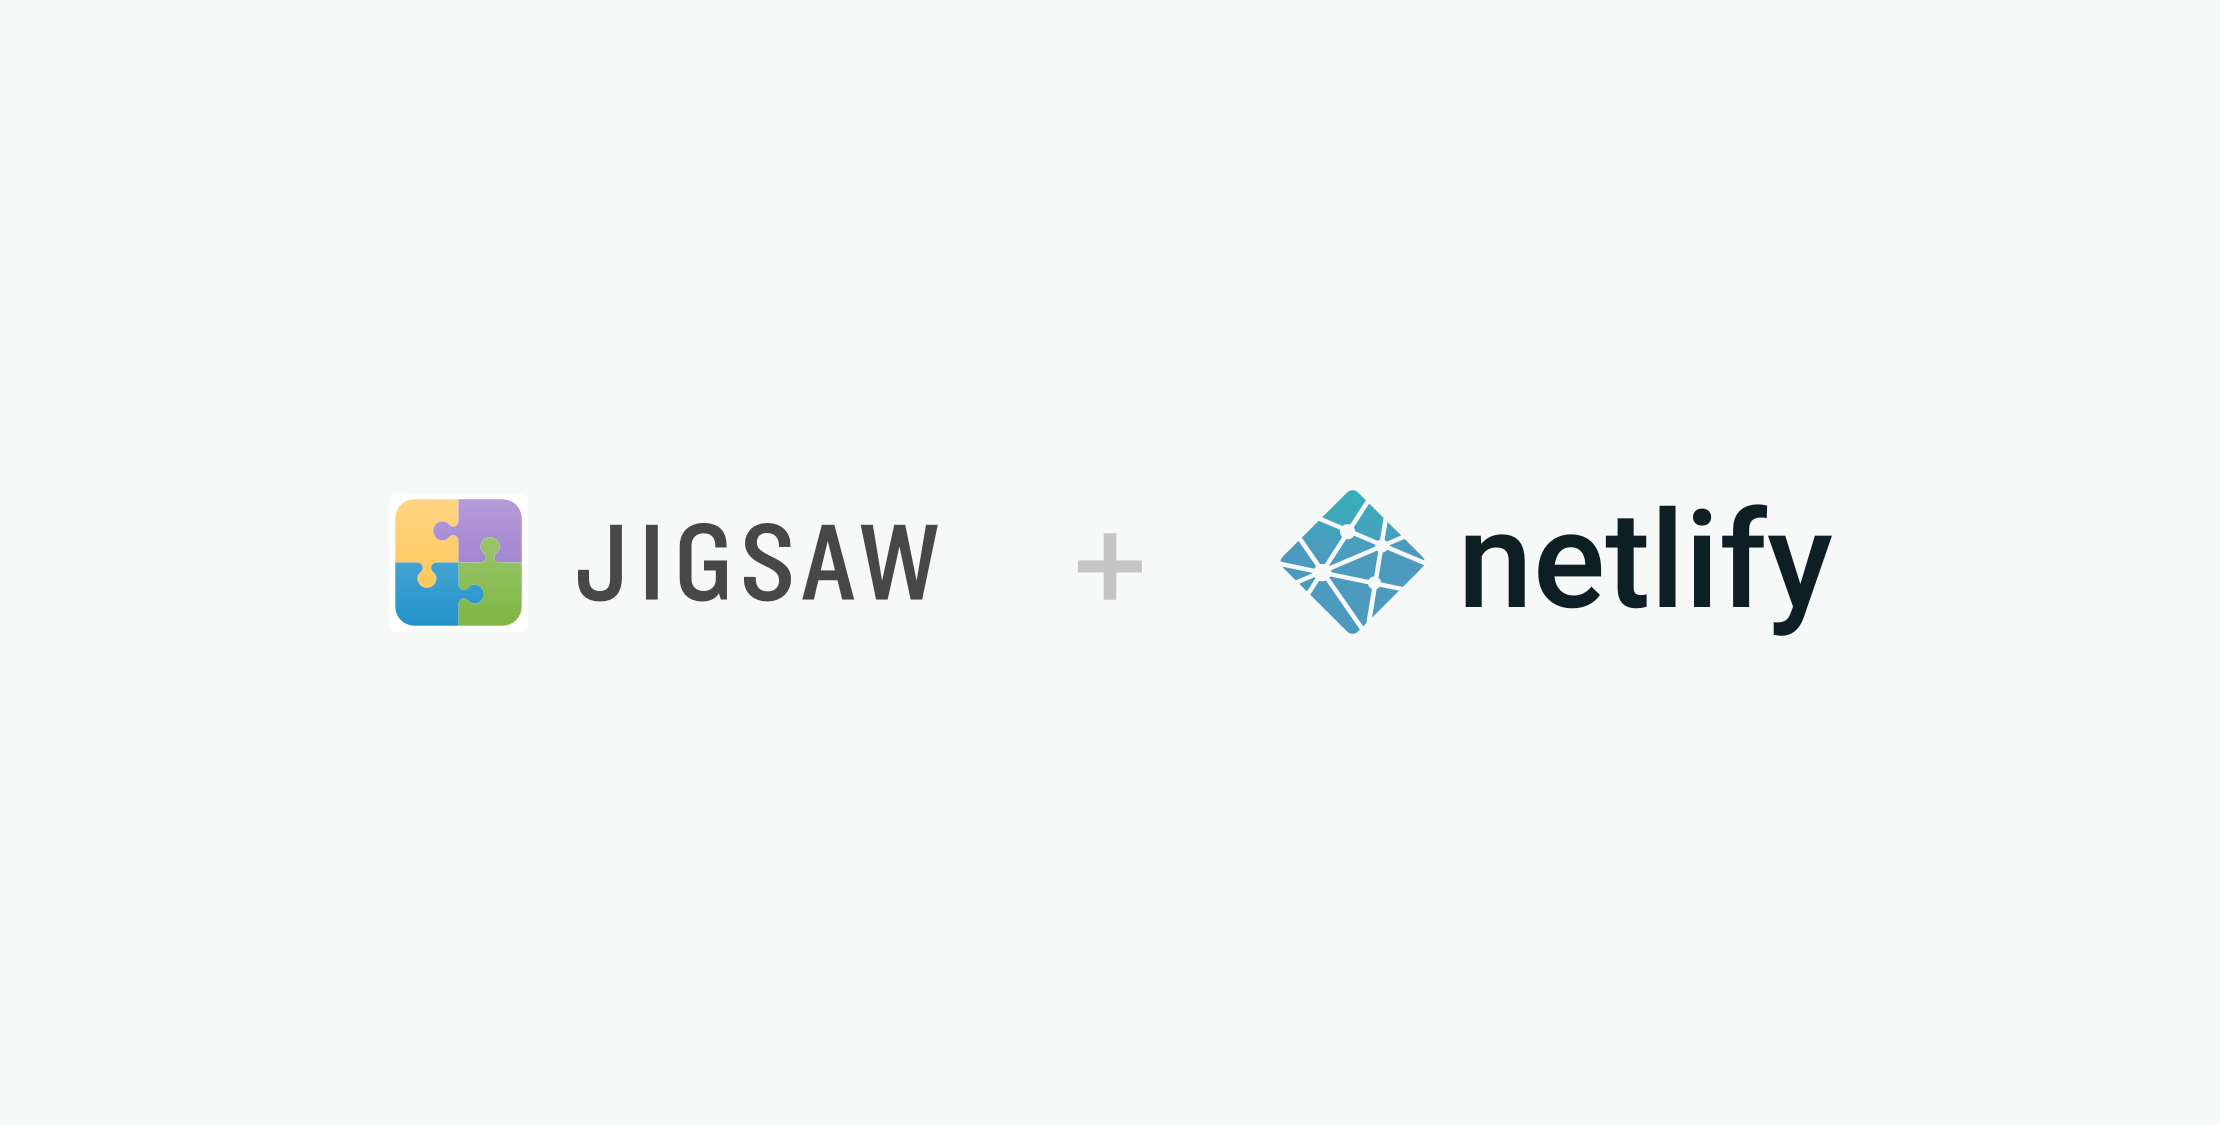 Jigsaw and Netlify image